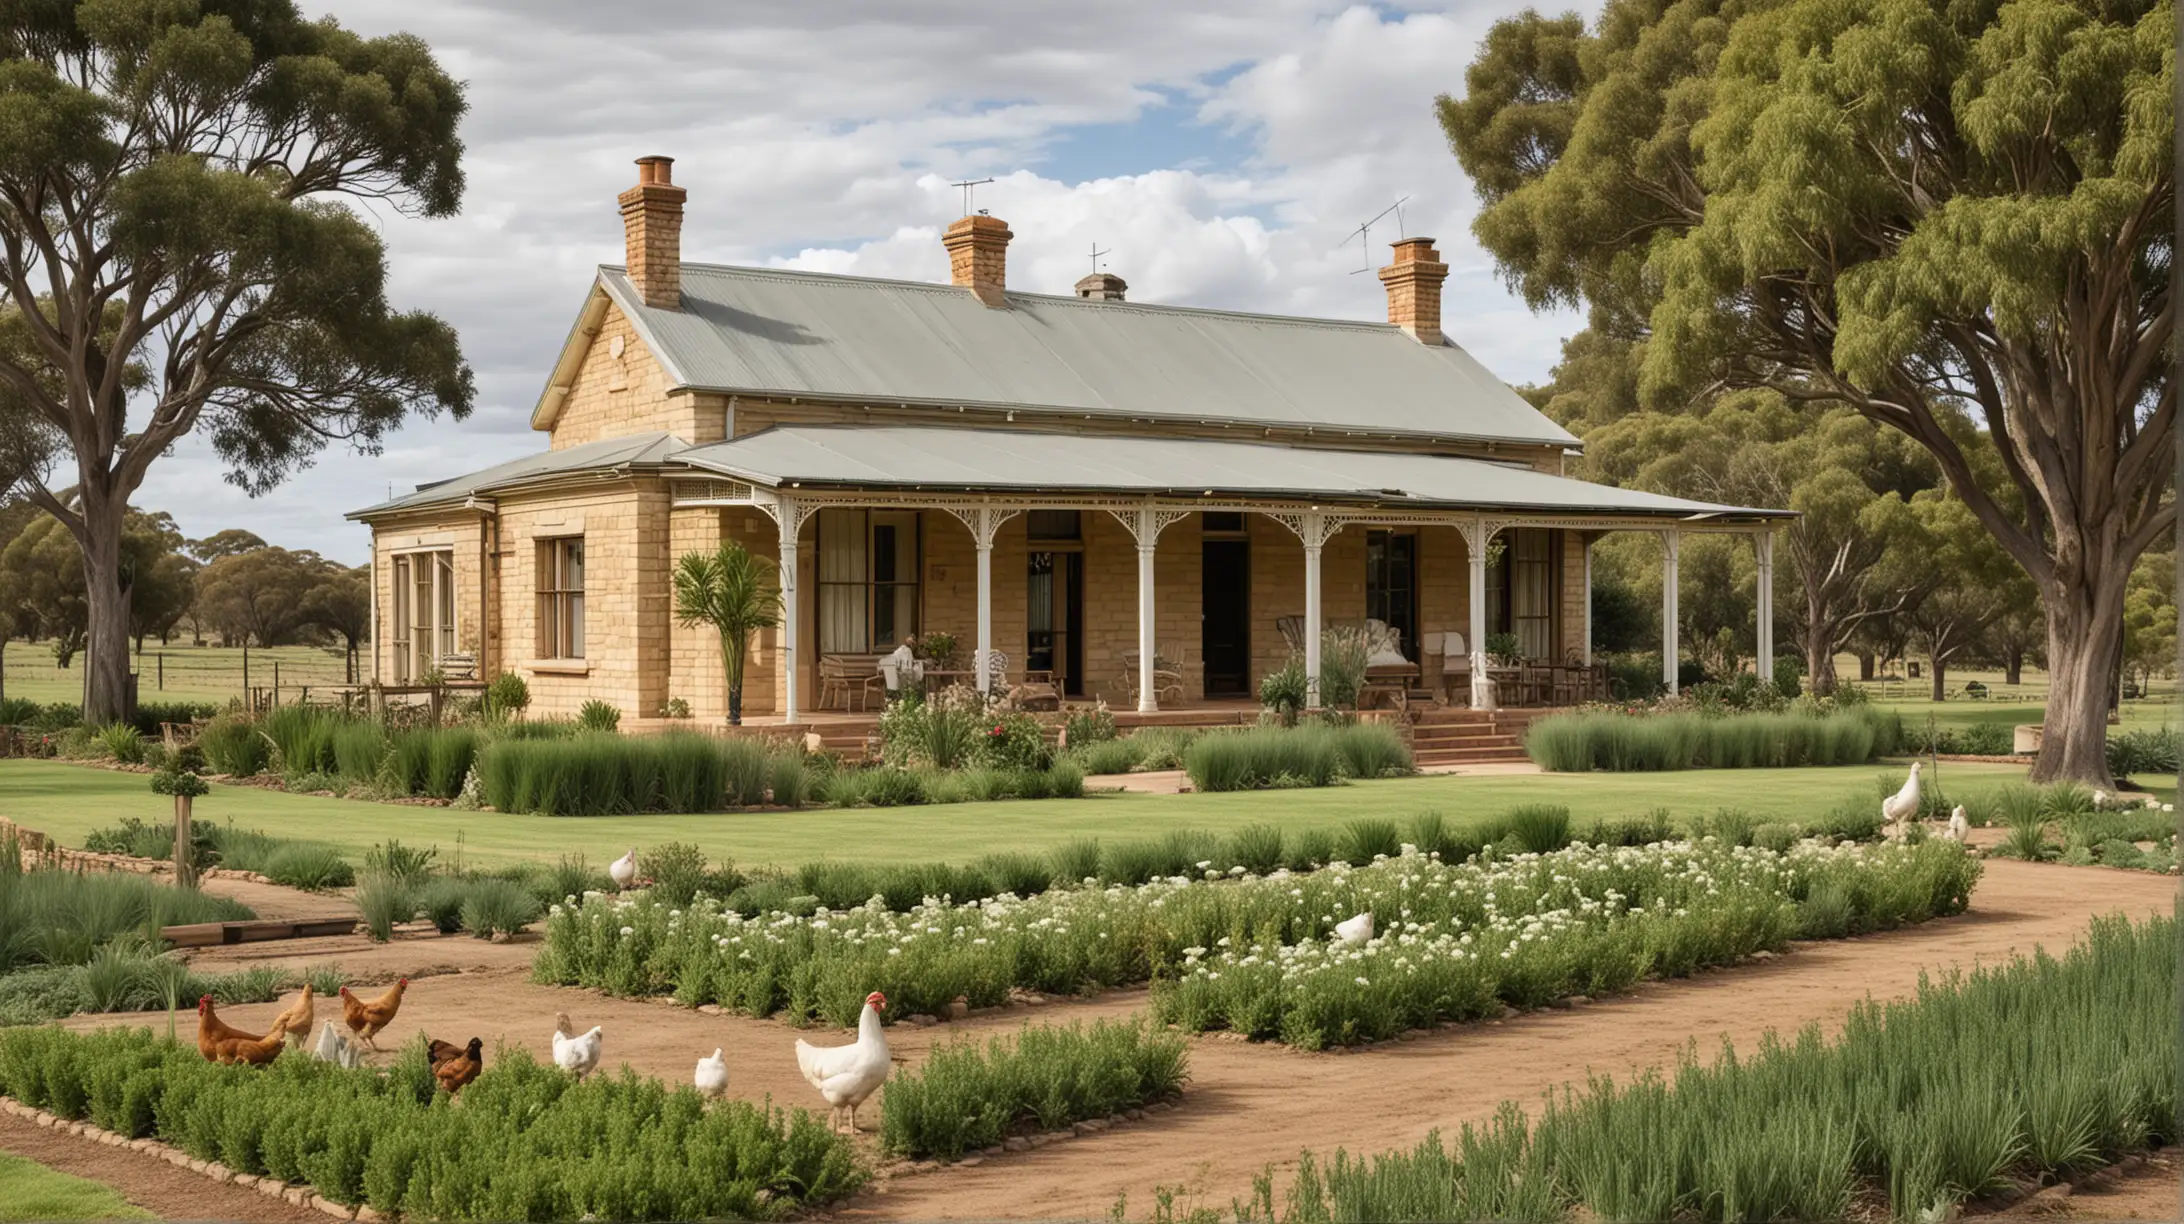  a 1900's Australian farmhouse set on hectares of fertile farmland; beige, black, olive green, sandstone, oak; garden beds, chickens, cows, sheep; separate little cottage